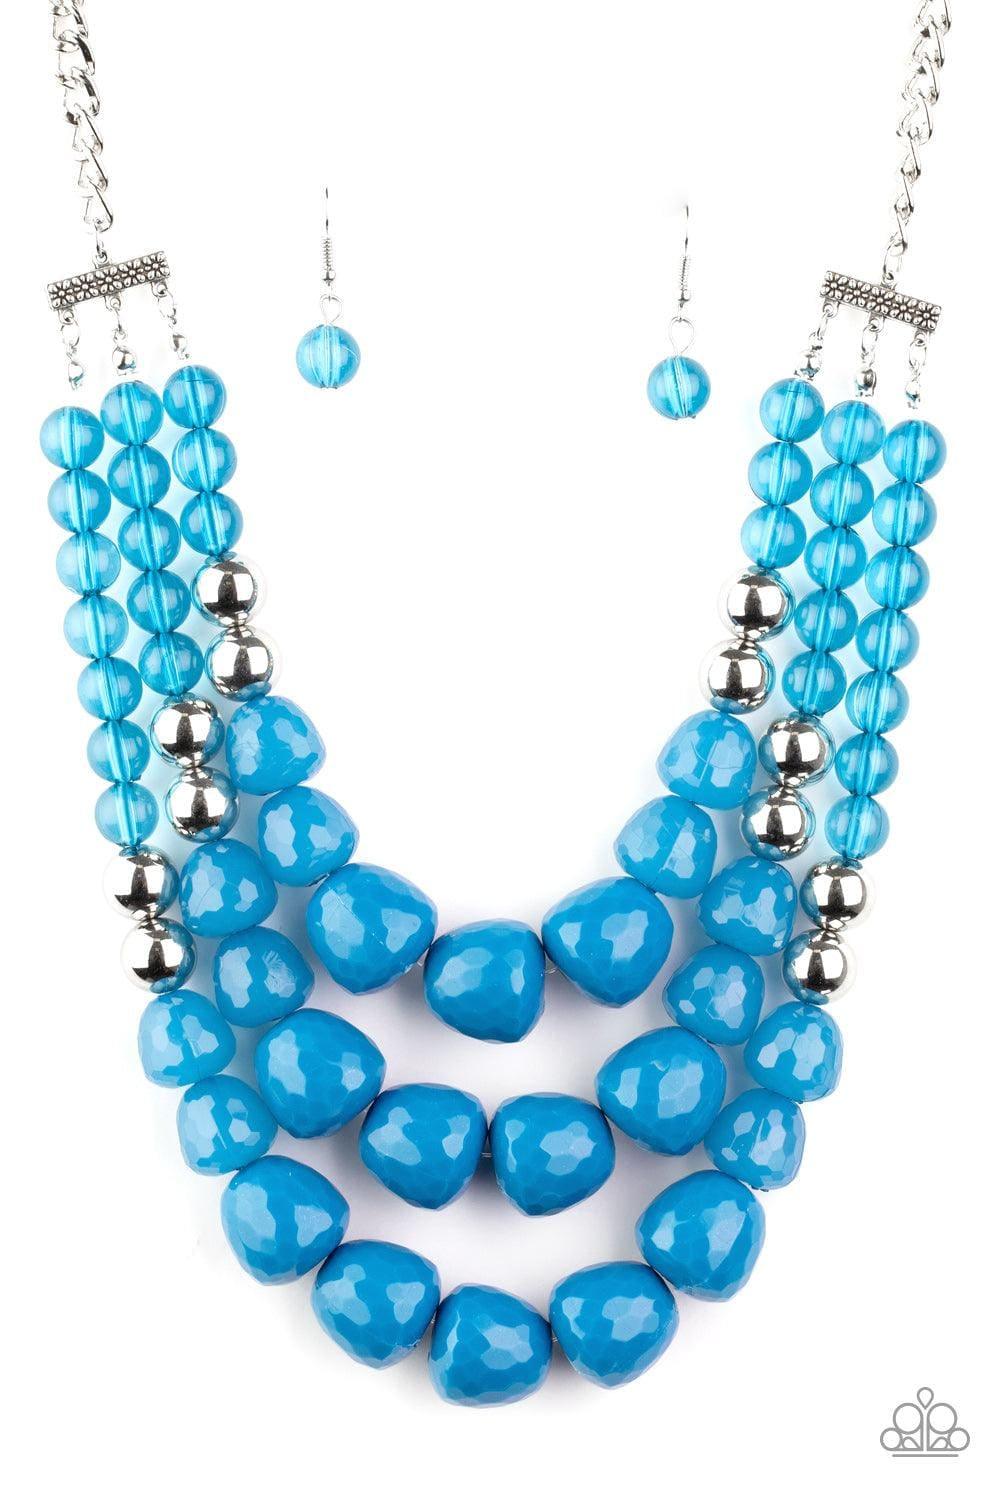 Paparazzi Accessories - Forbidden Fruit - Blue Necklace - Bling by JessieK